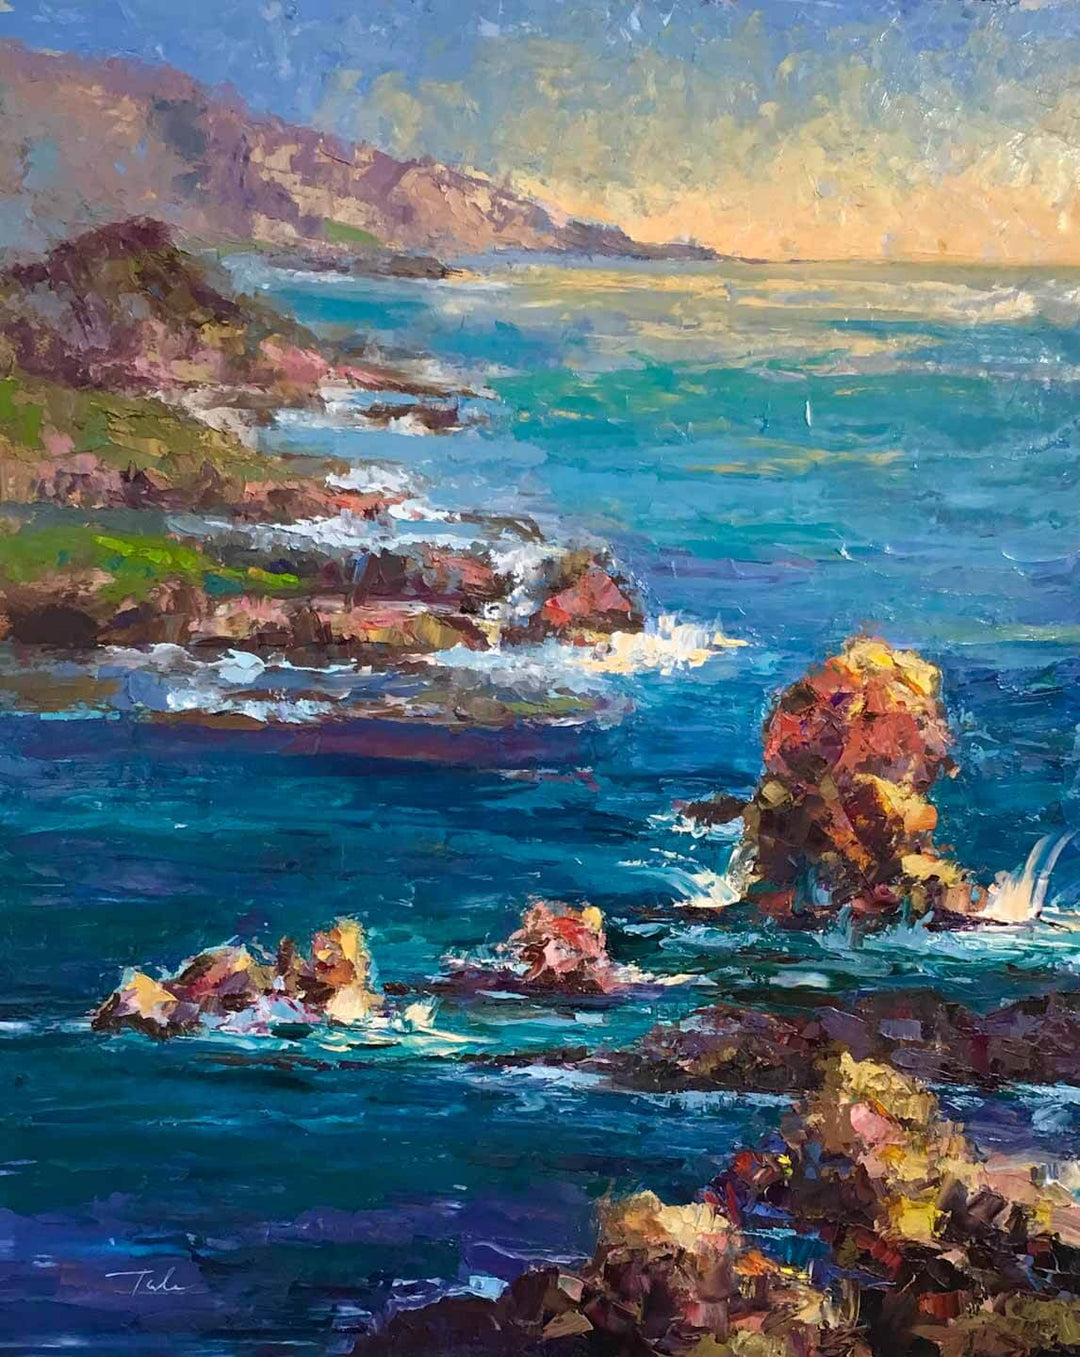 The Listeners: Impressionist coastal seascape